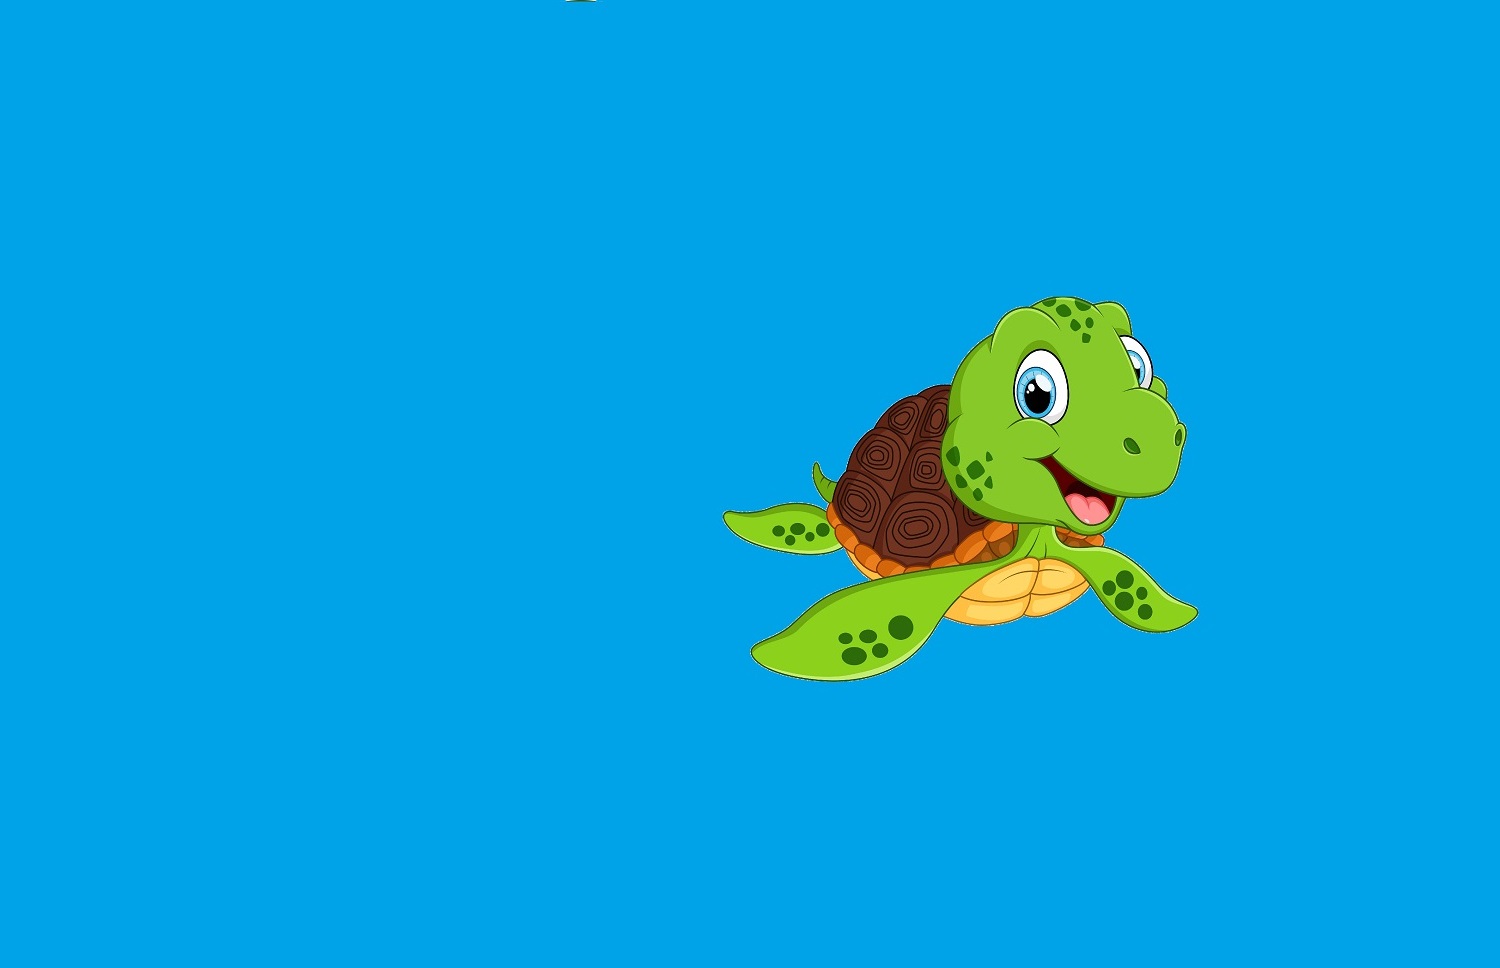 Our Kids club mascot, Zippy the sea turtle